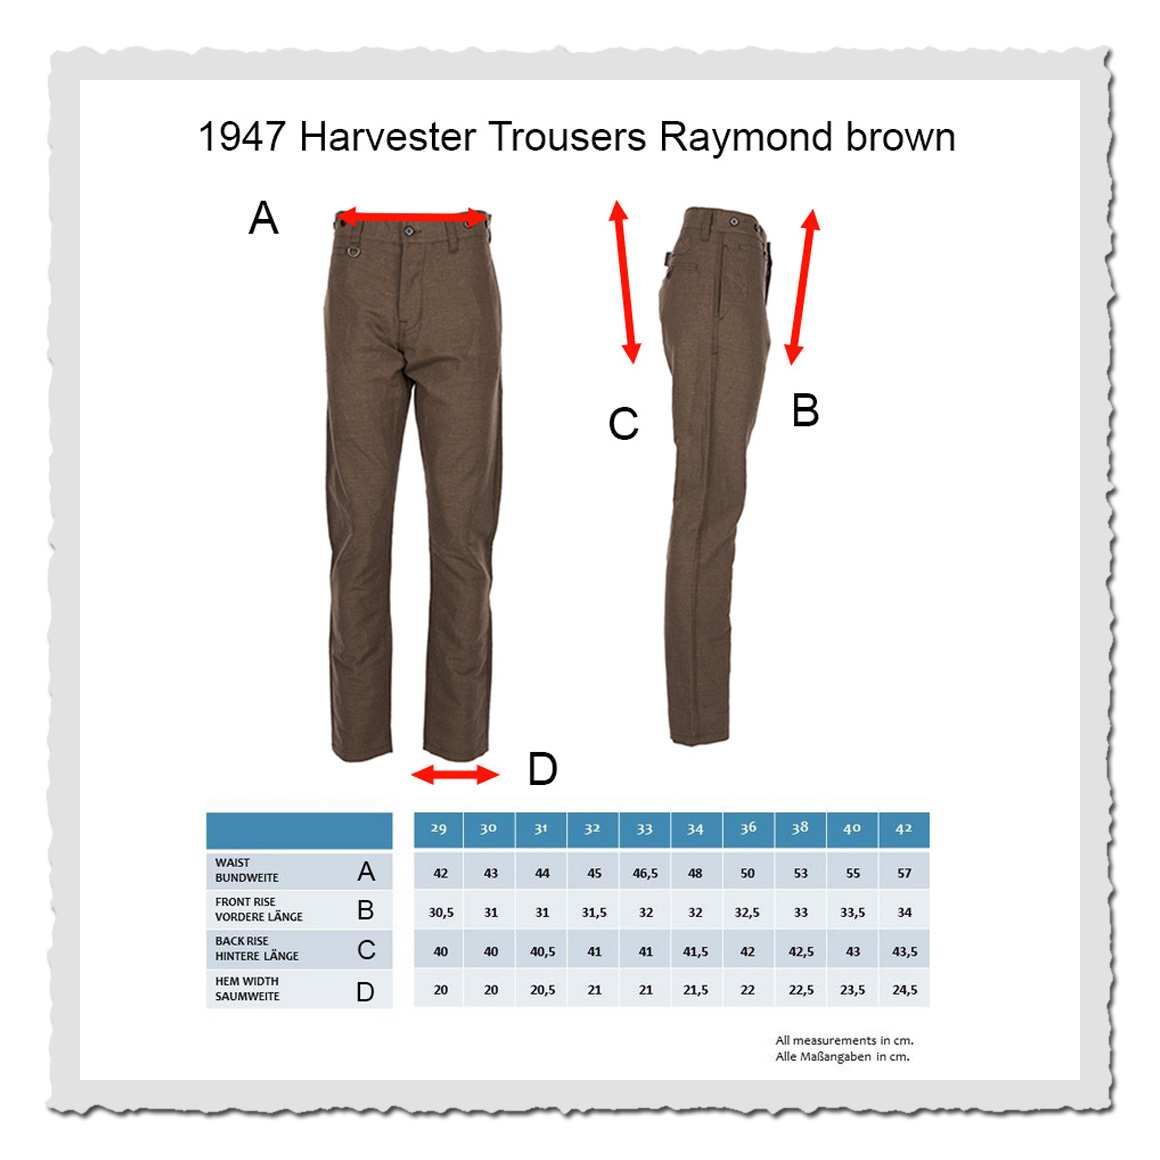 1947 Harvester Trousers Raymond brown